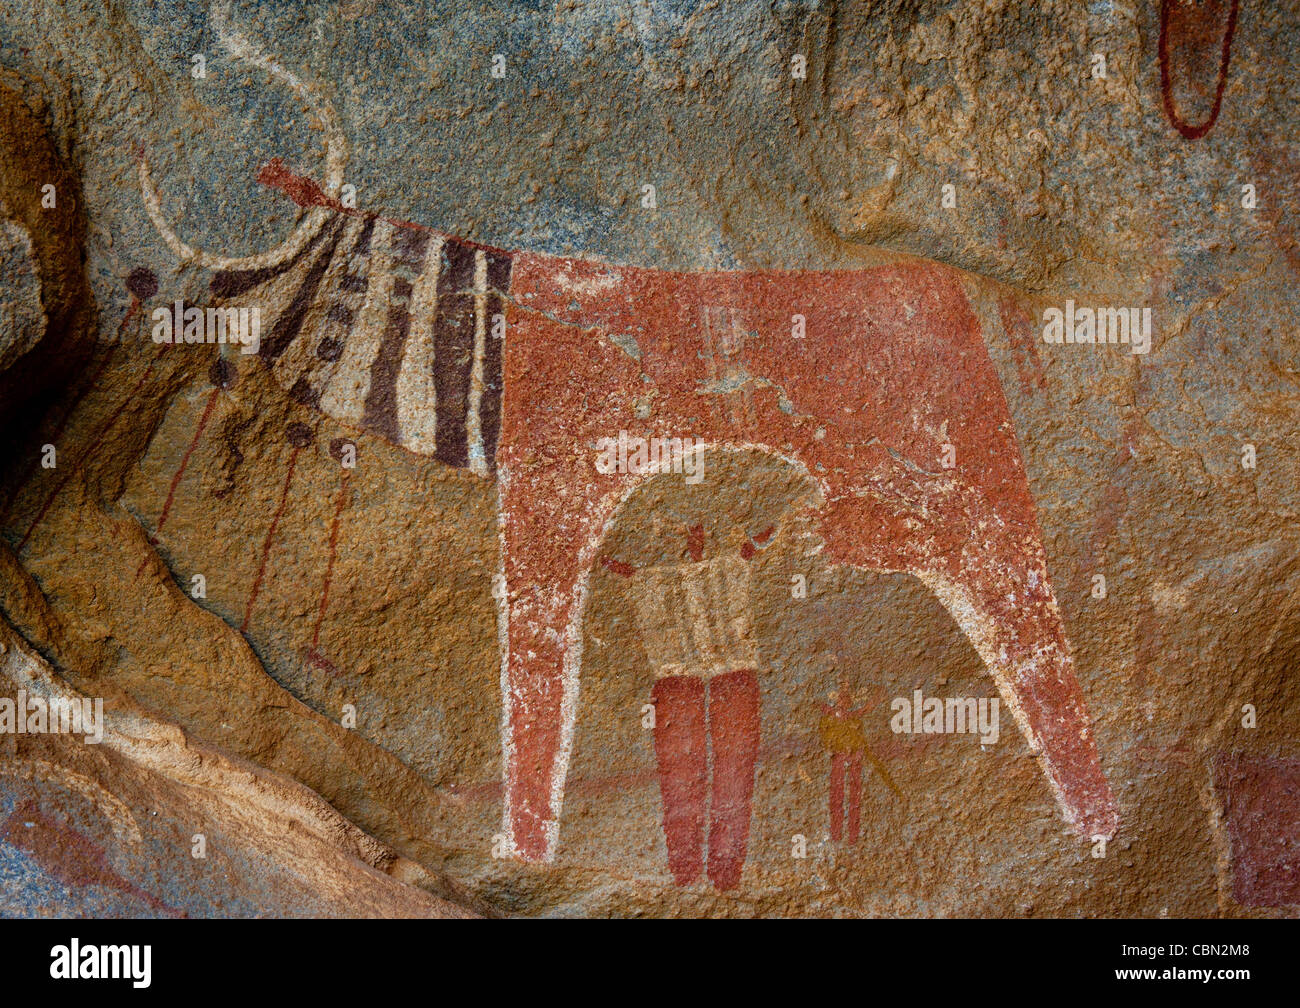 Laas Geel Rock Art Caves, Paintings Depicting Cows And Human Beings Somaliland Stock Photo